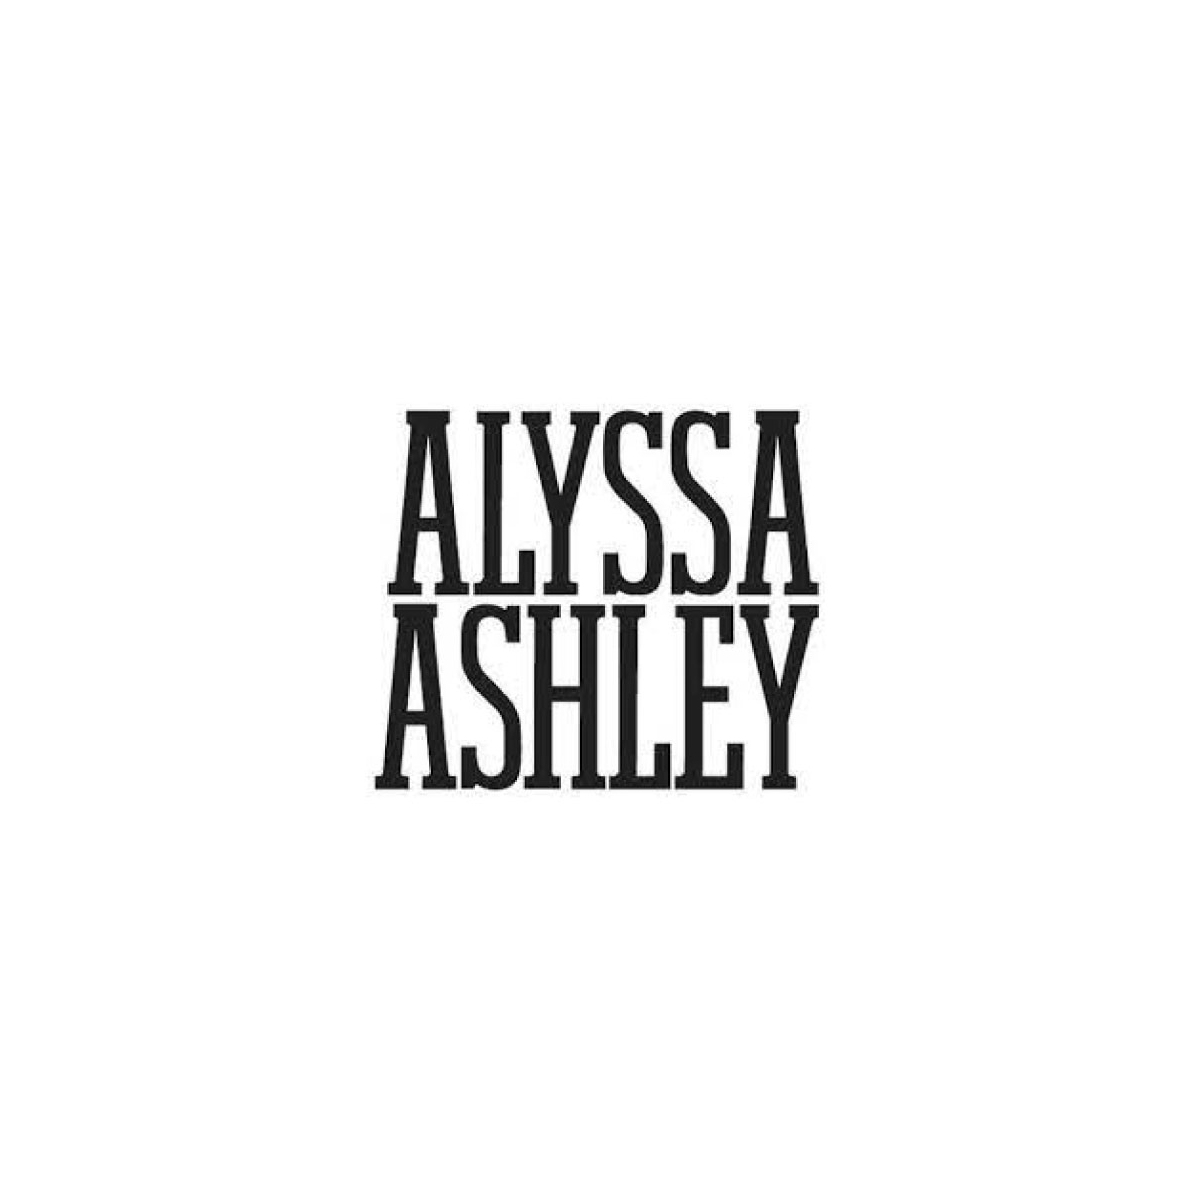 Alyssa ashley